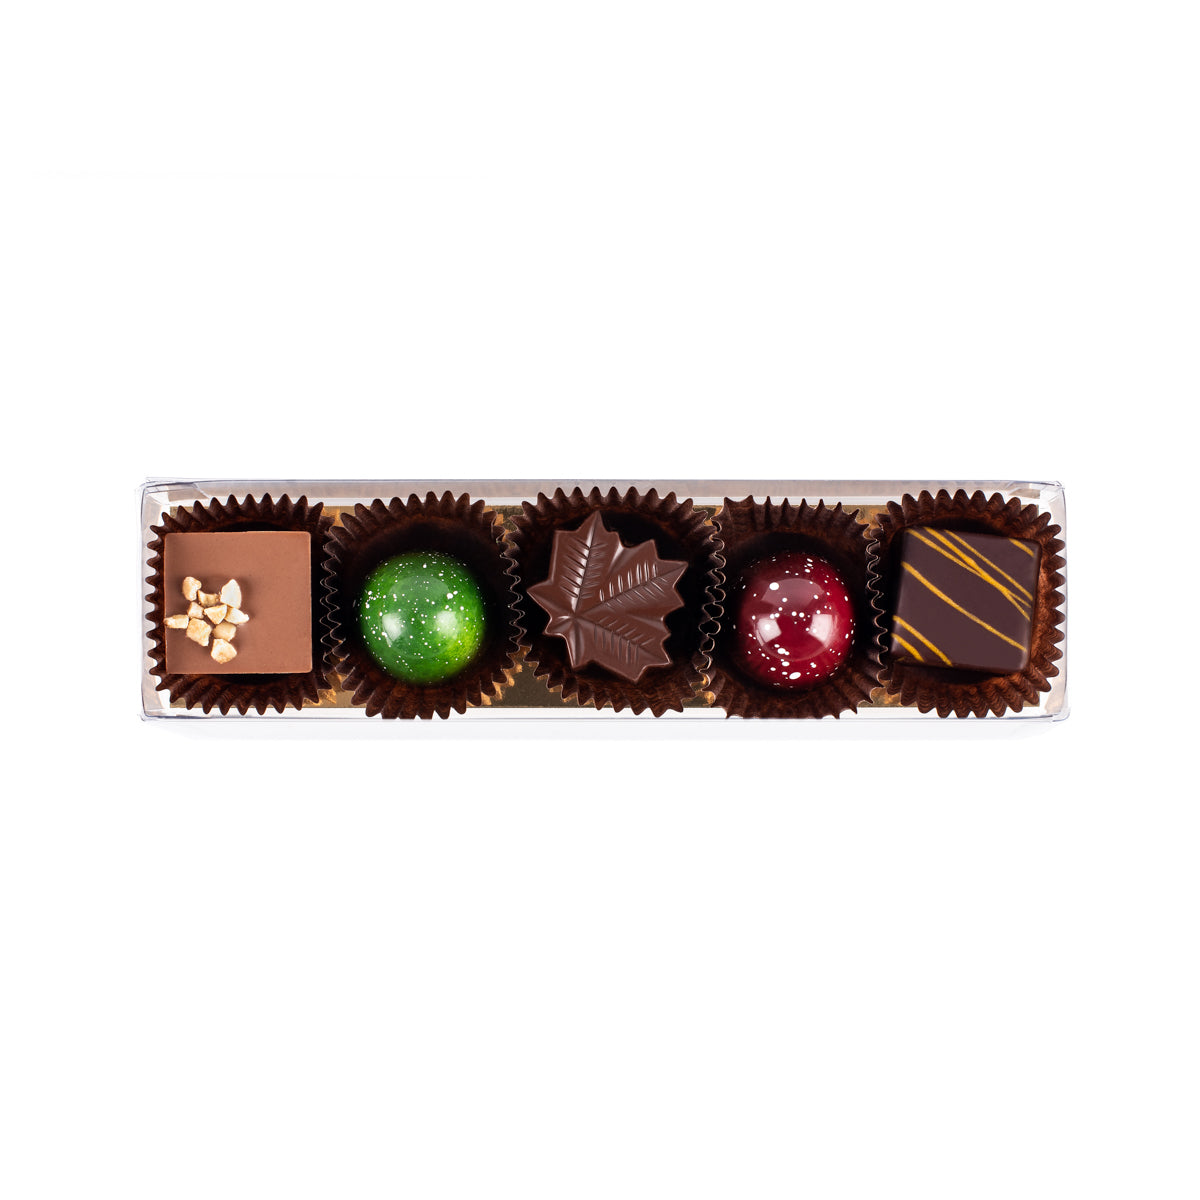 Box of 5 assorted chocolates